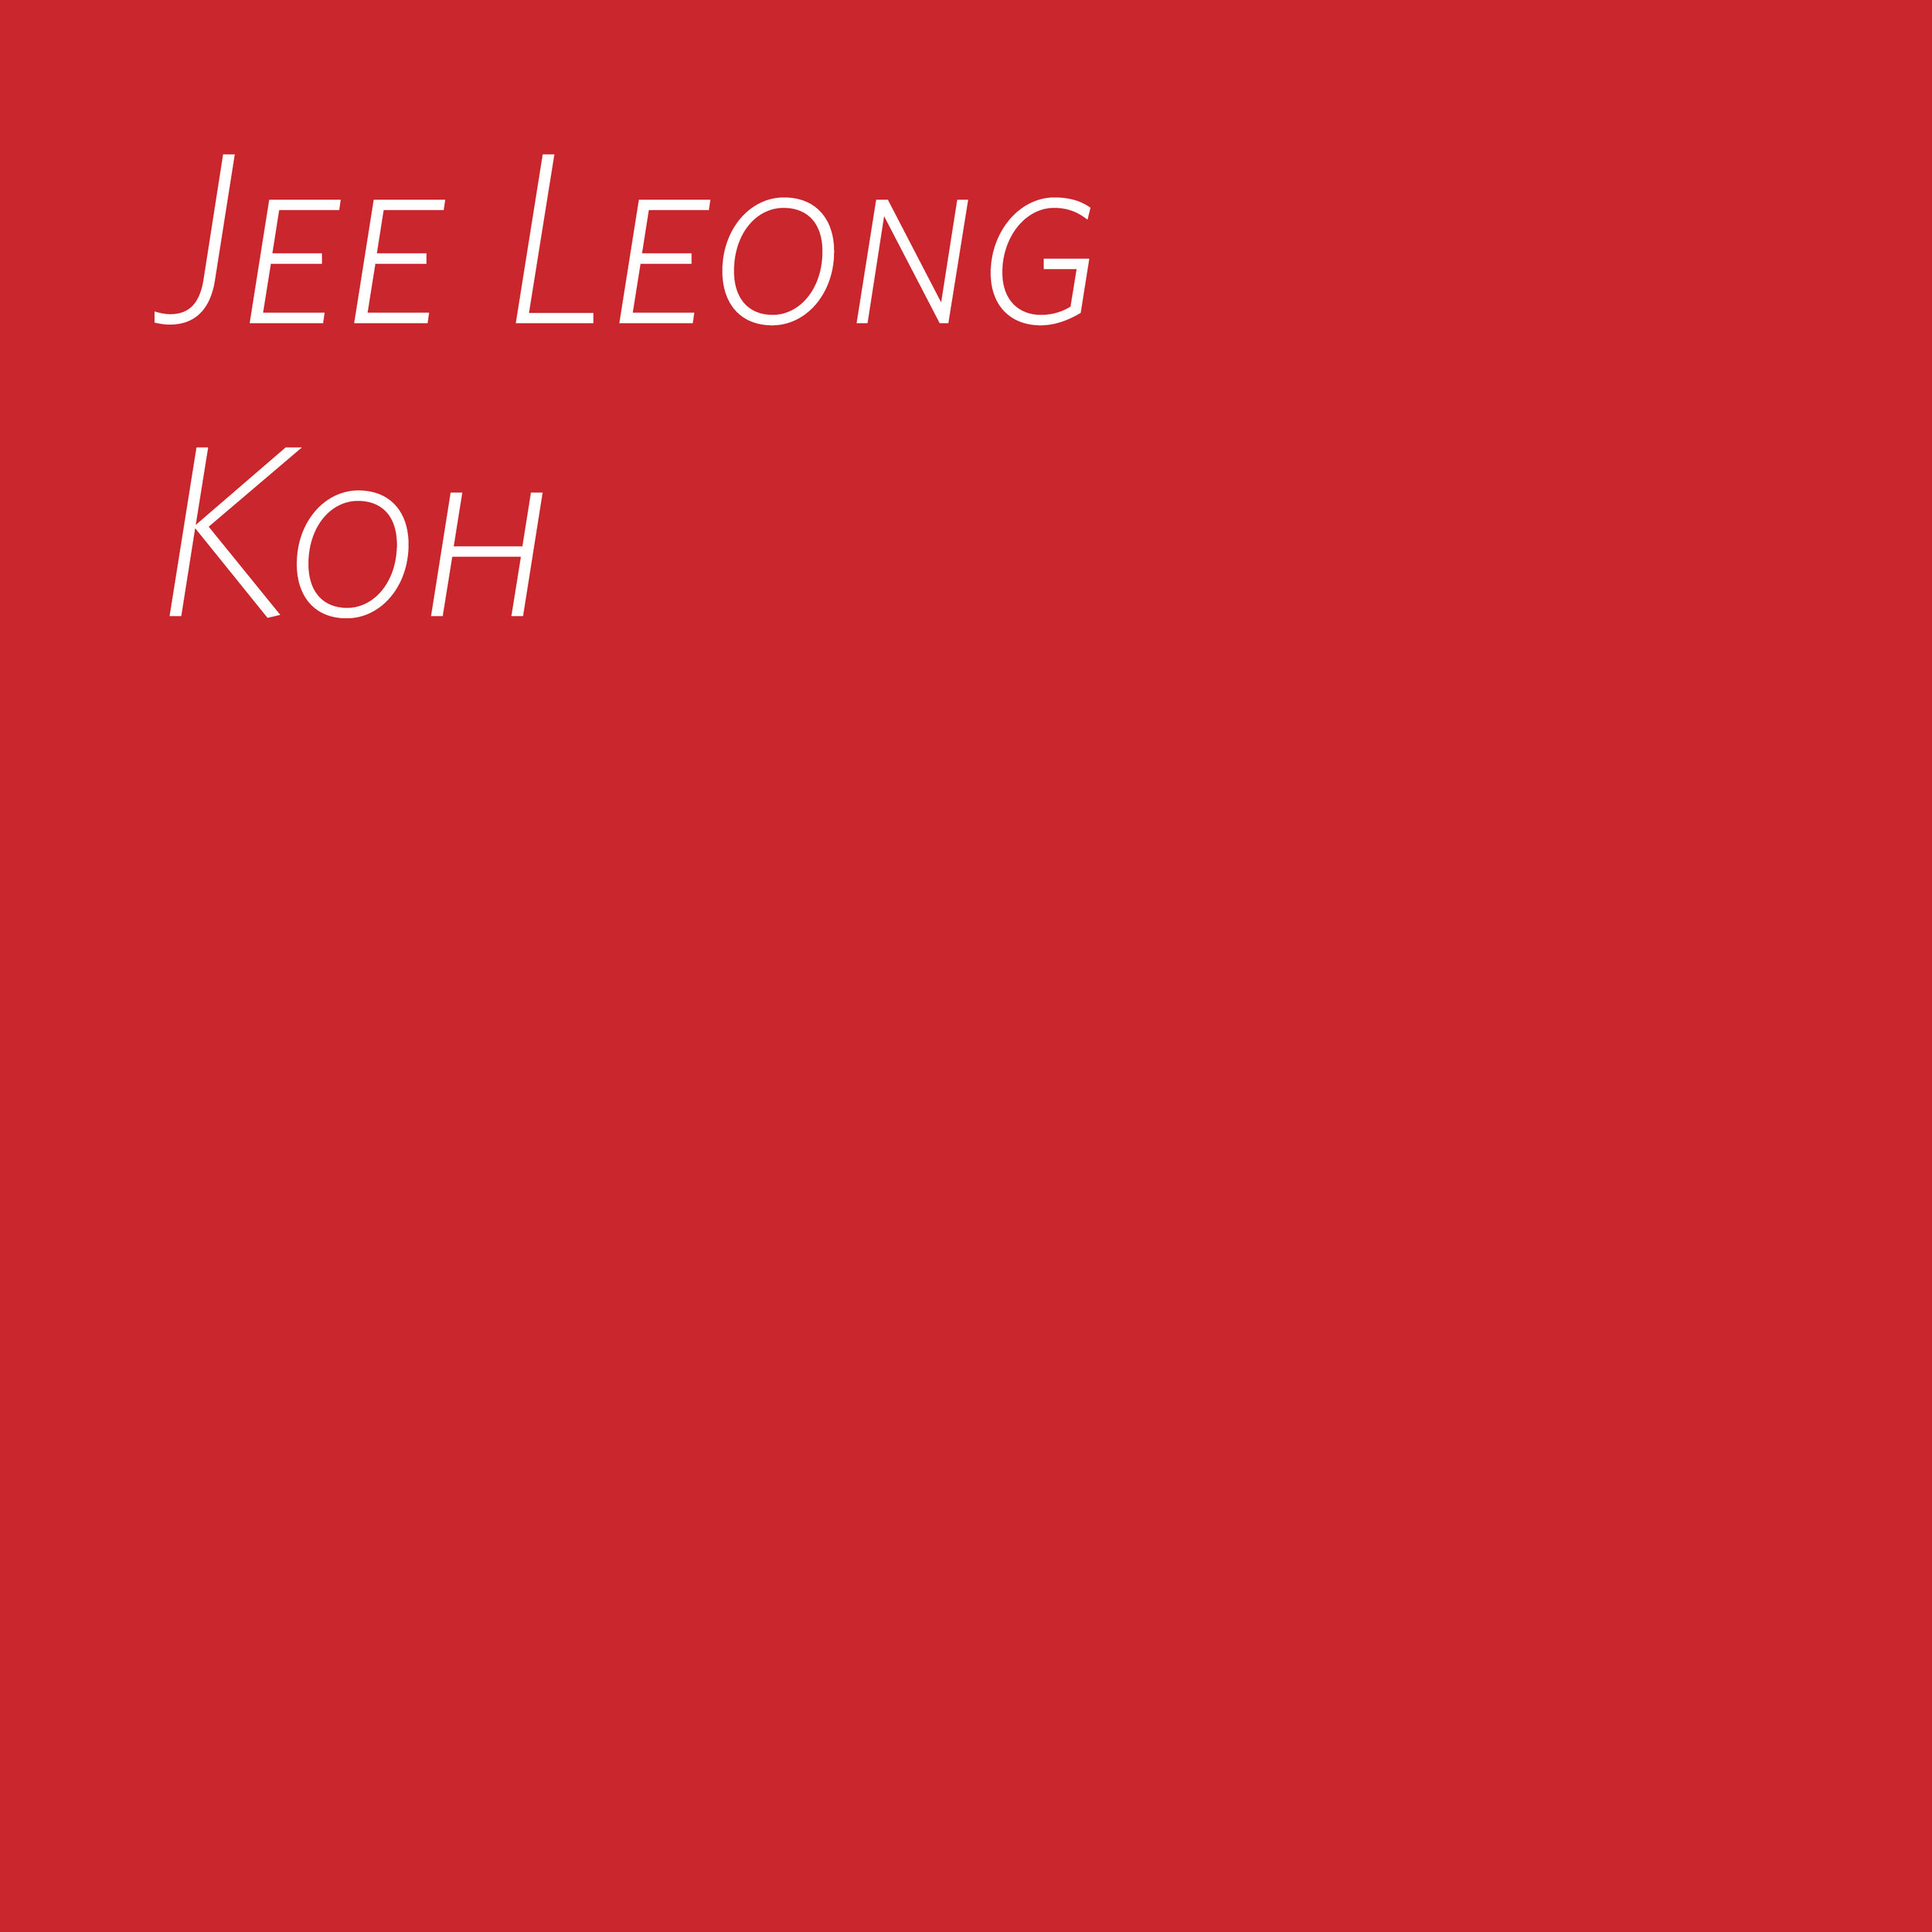 Poemas, Jee Leong Koh — Jogos Florais